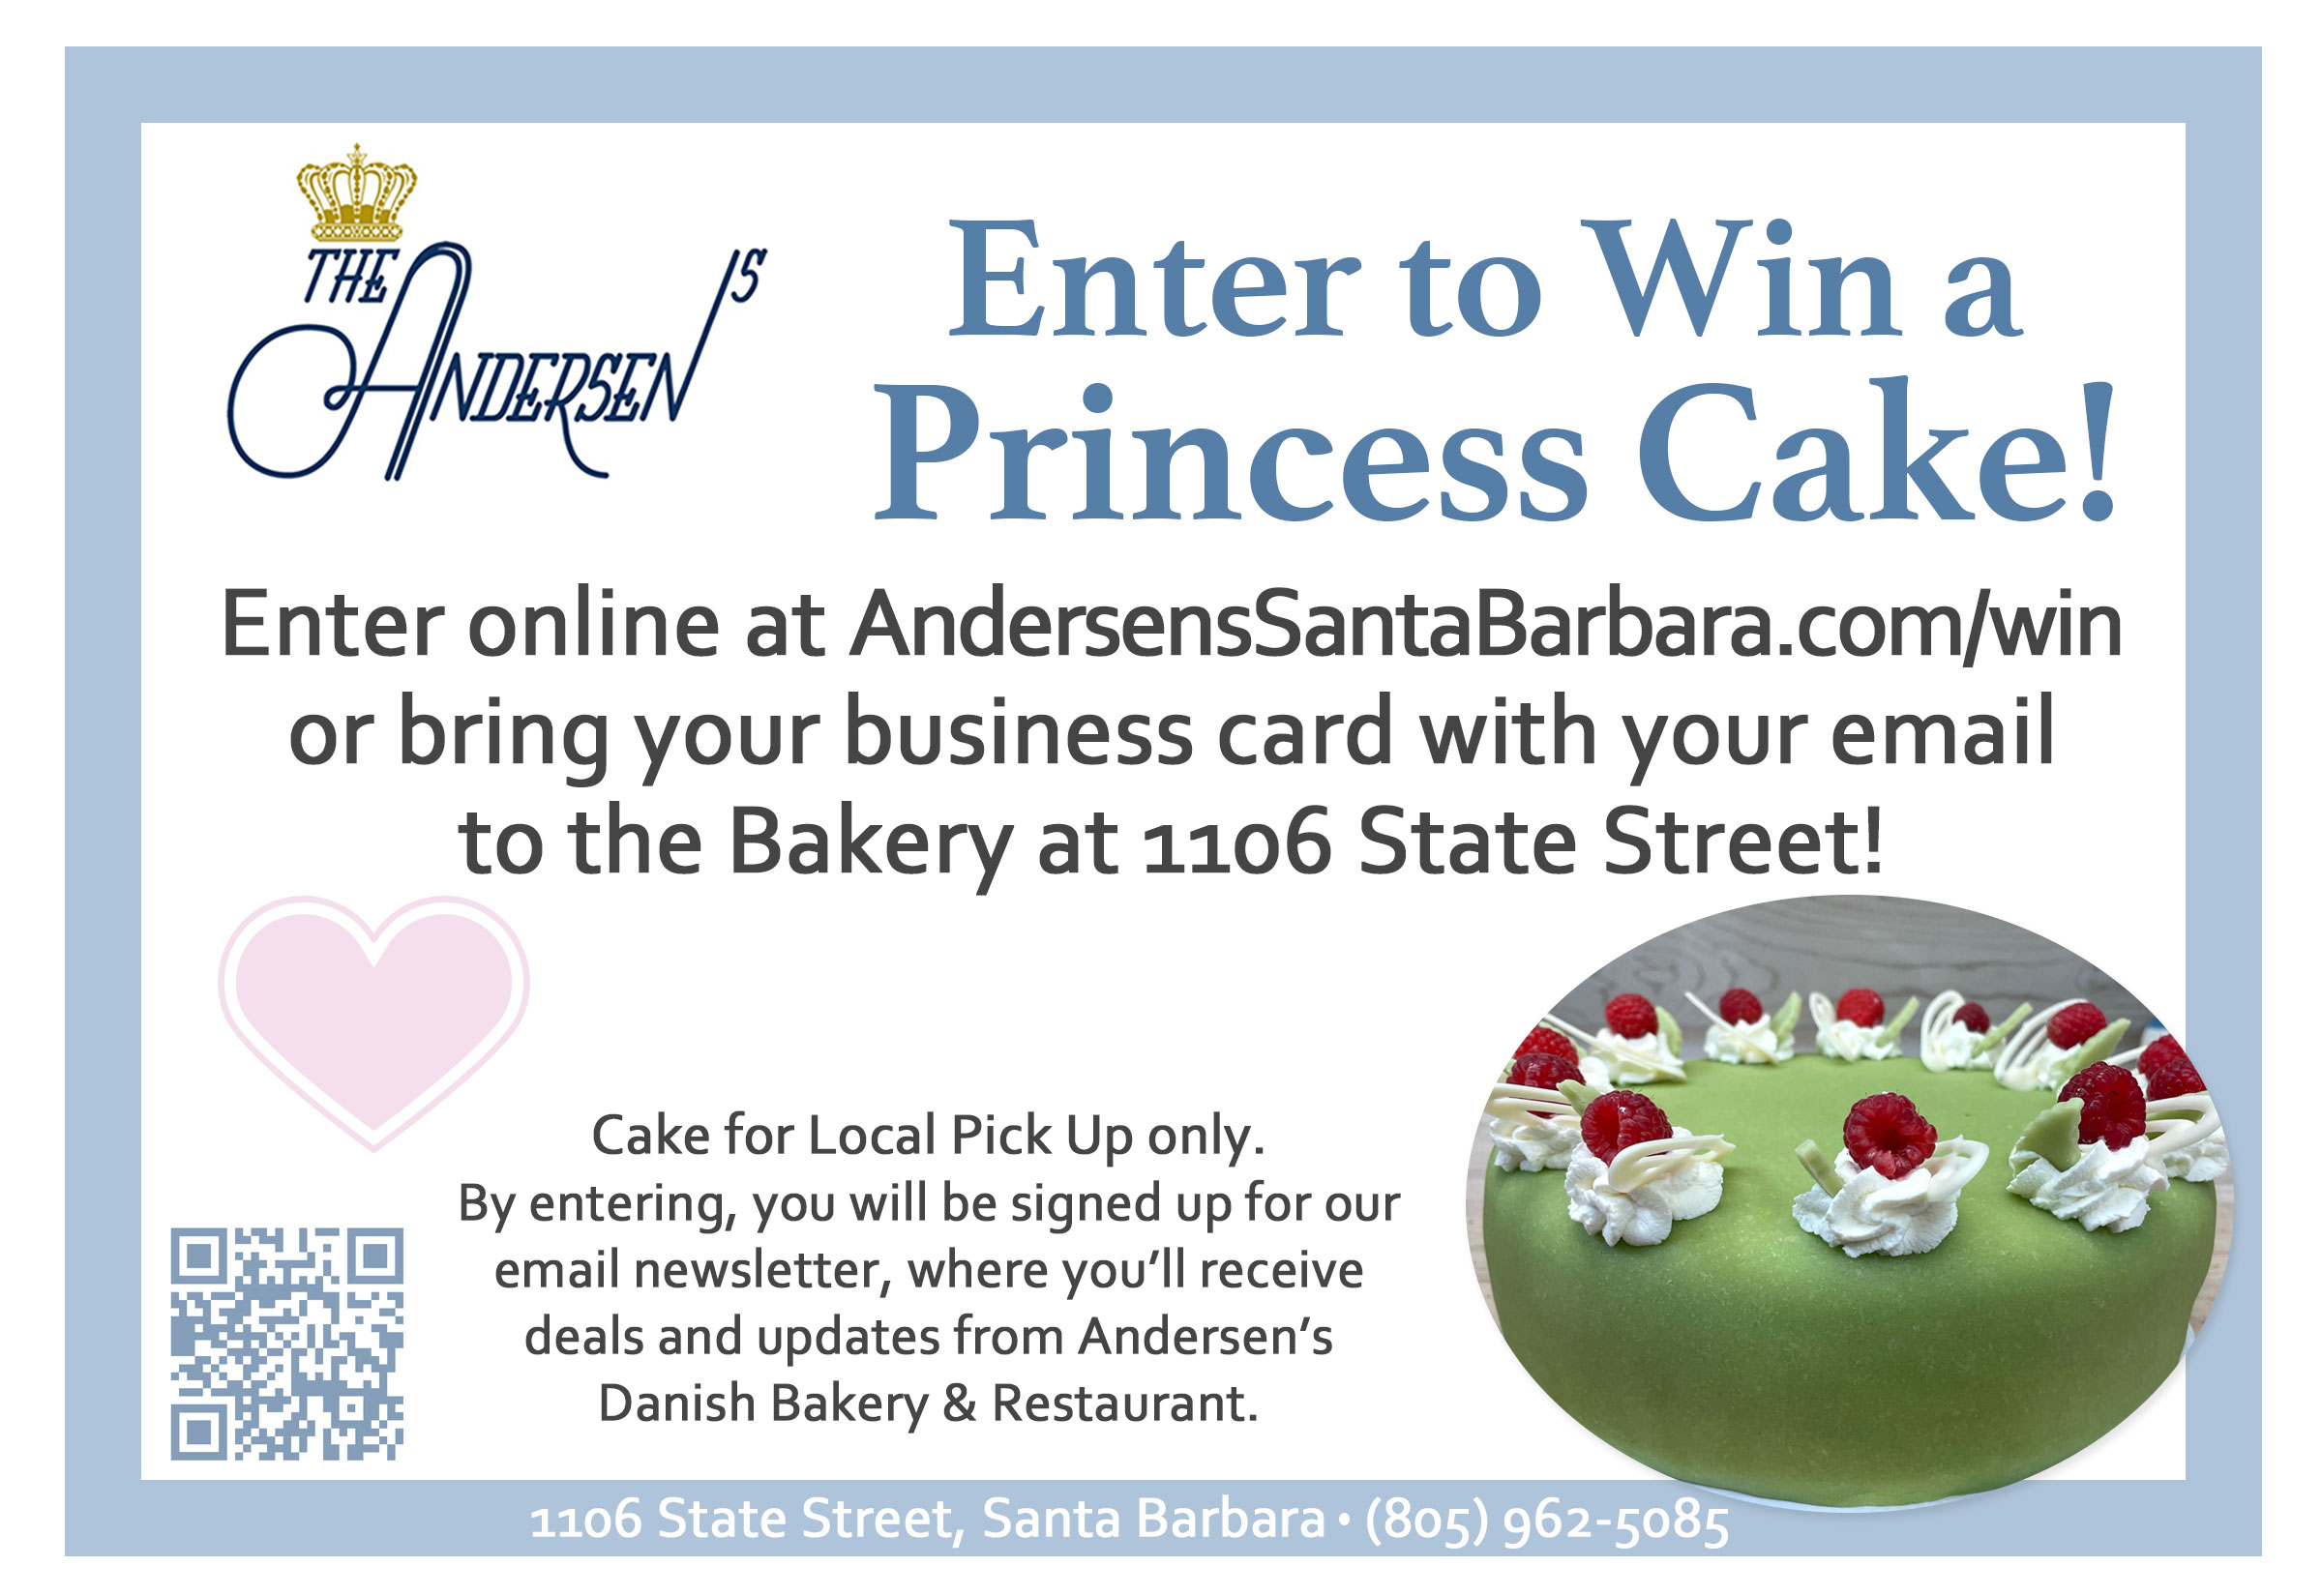 Win a Princess Cake from Andersen’s Danish Bakery & Restaurant.